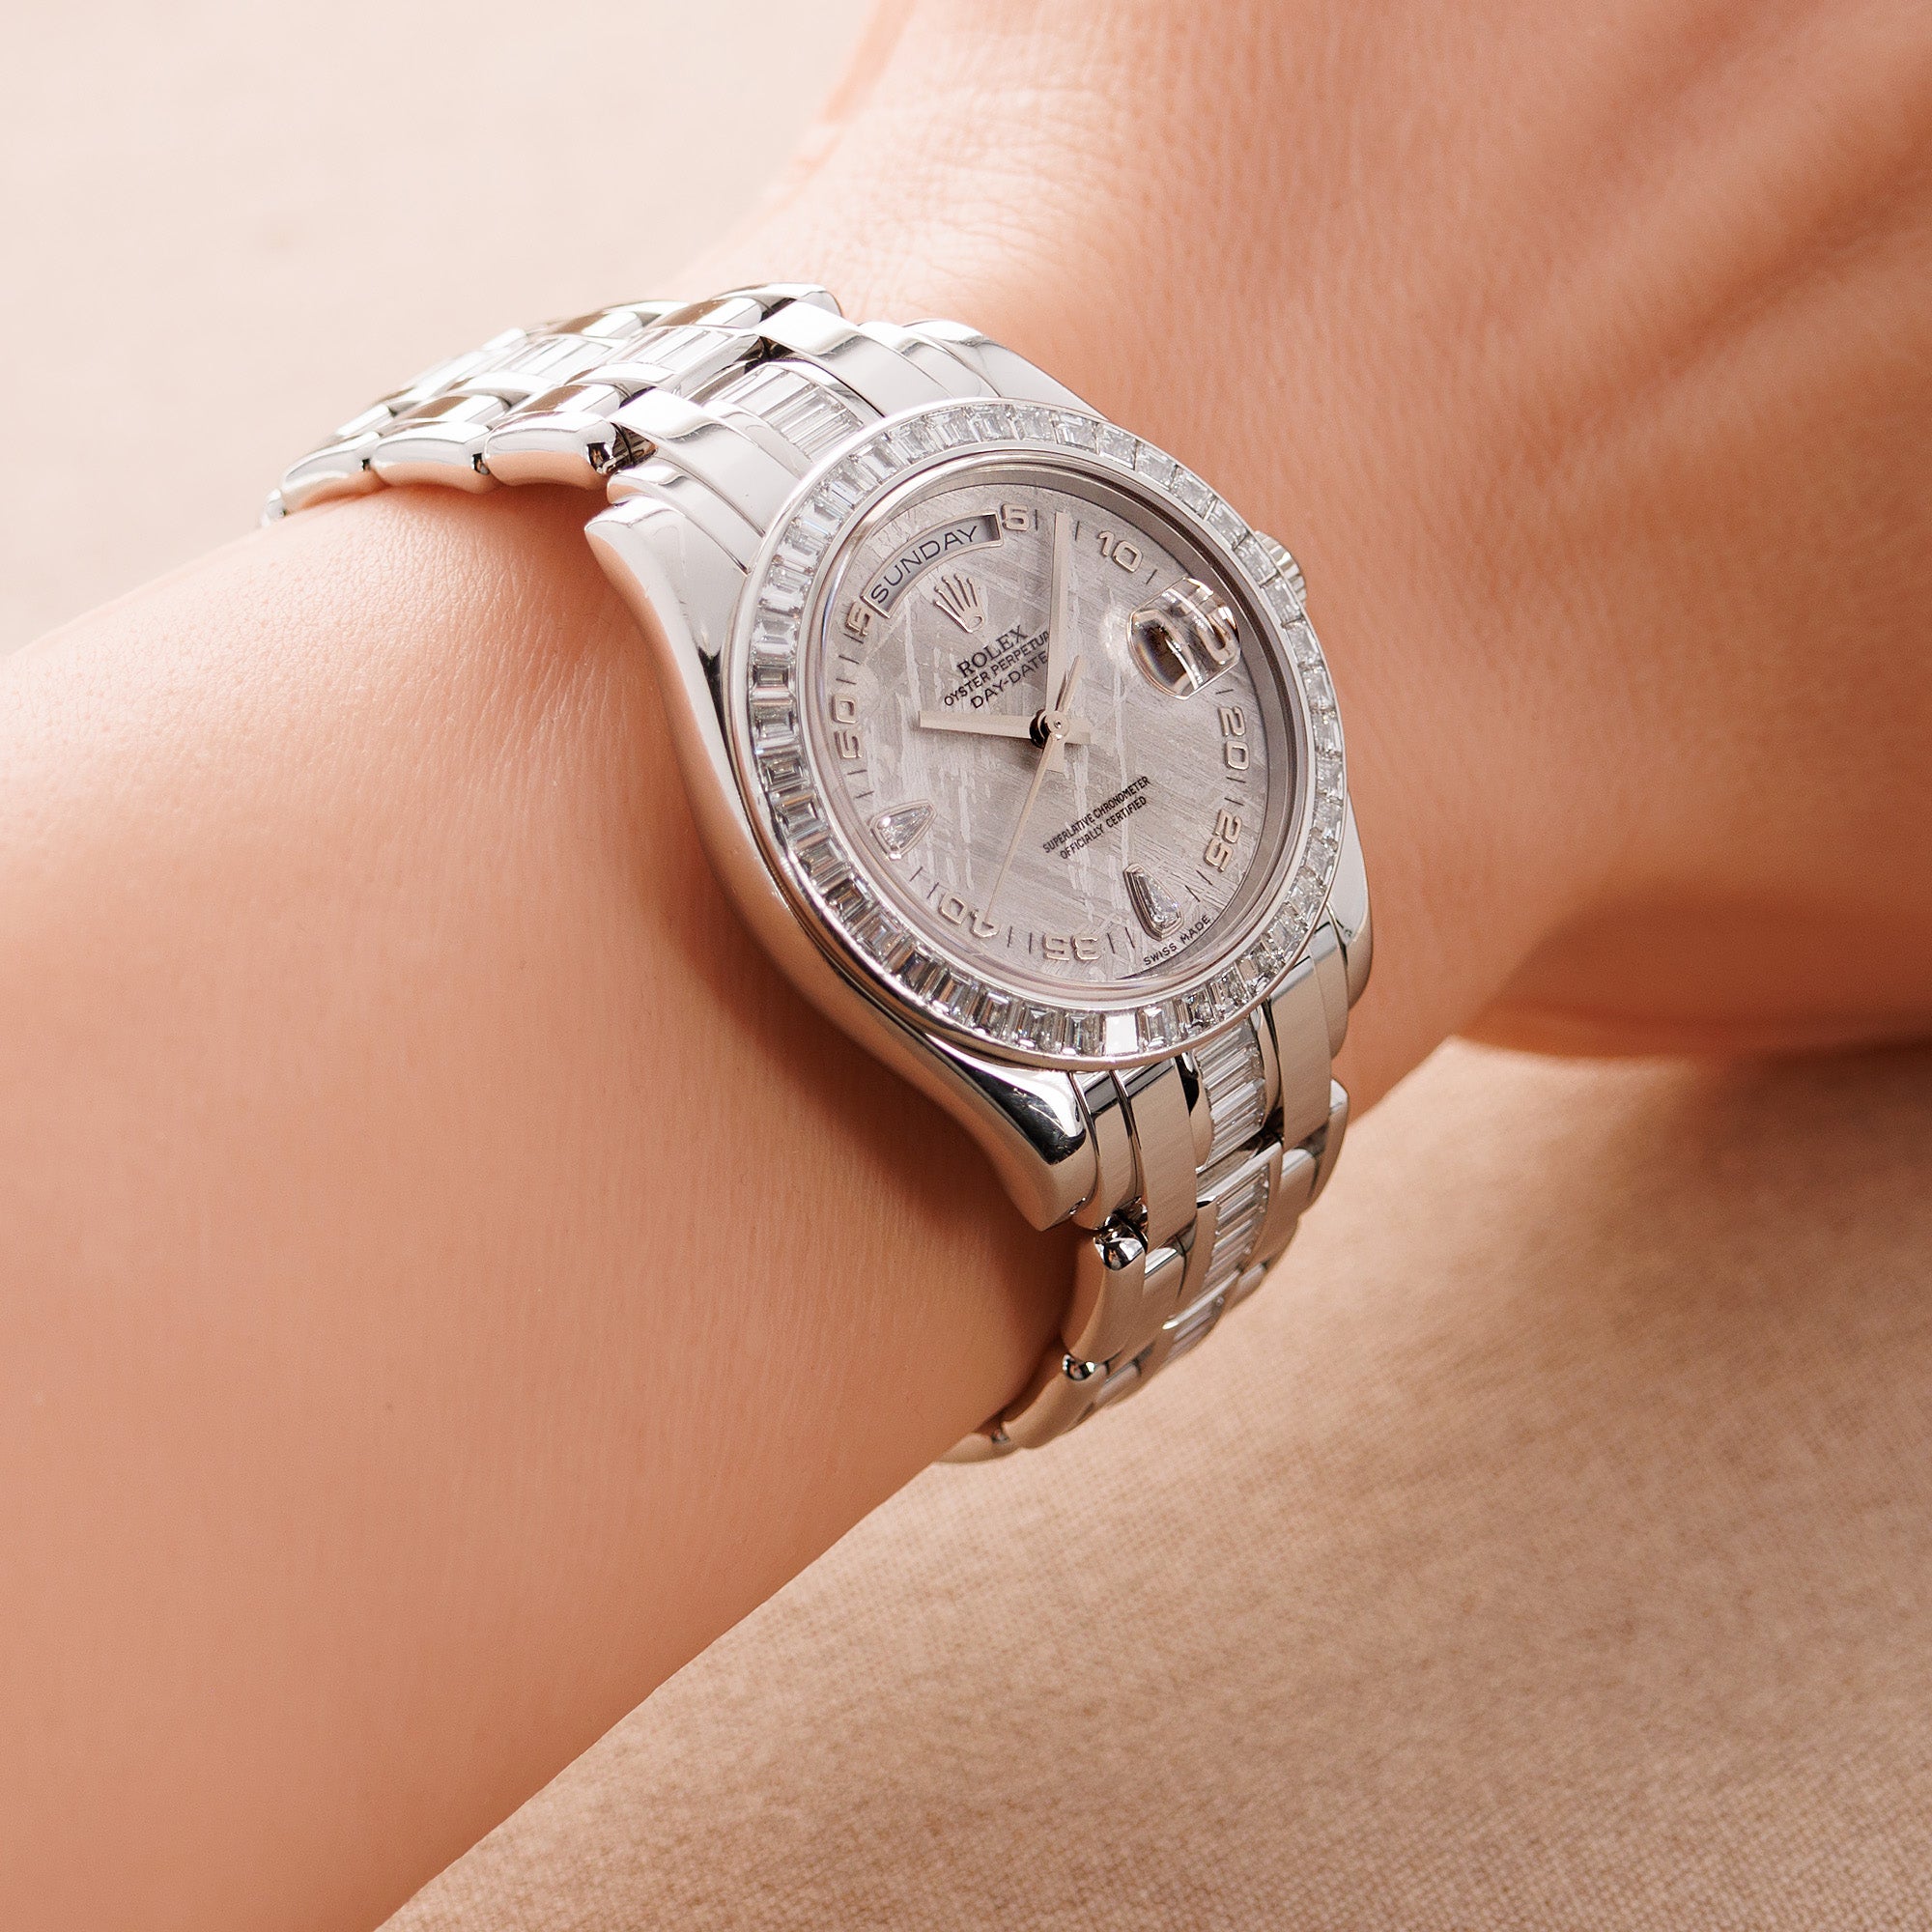 Rolex - Rolex Platinum Day-Date Masterpiece Ref. 18956 with Meteorite Dial - The Keystone Watches